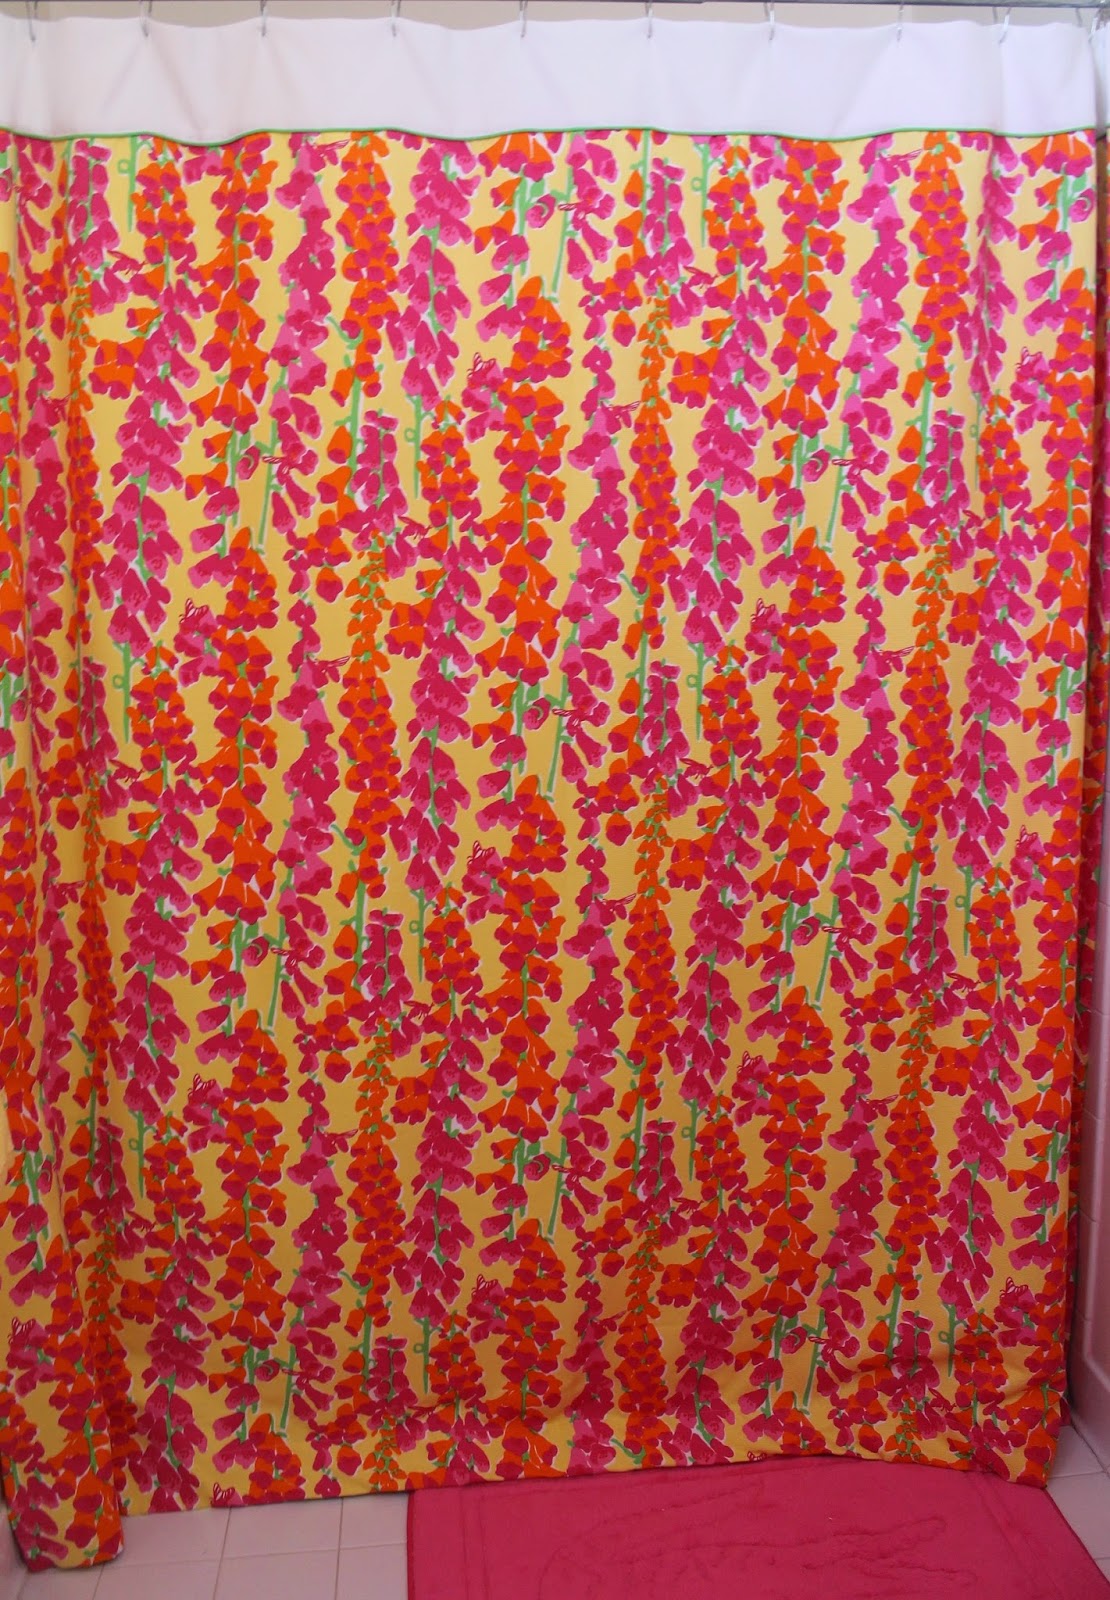 Garnet Hill Lilly Pulitzer Bath, Lilly Pulitzer Inspired Shower Curtain